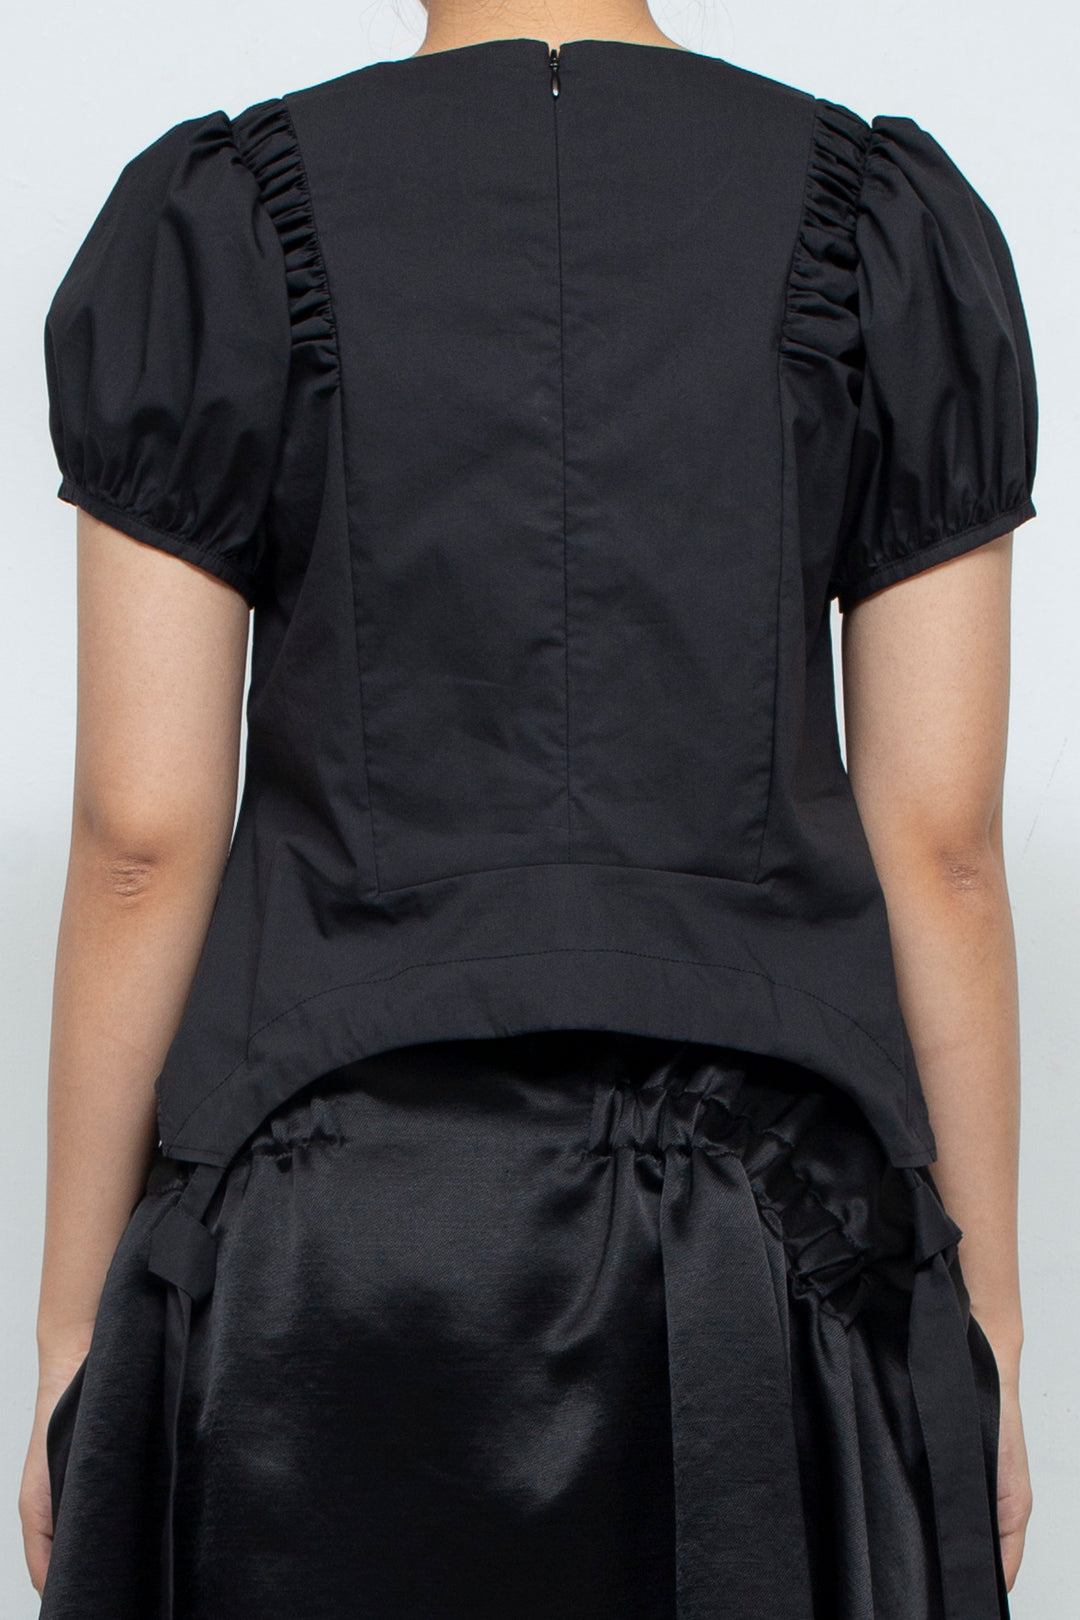 Design blouse black